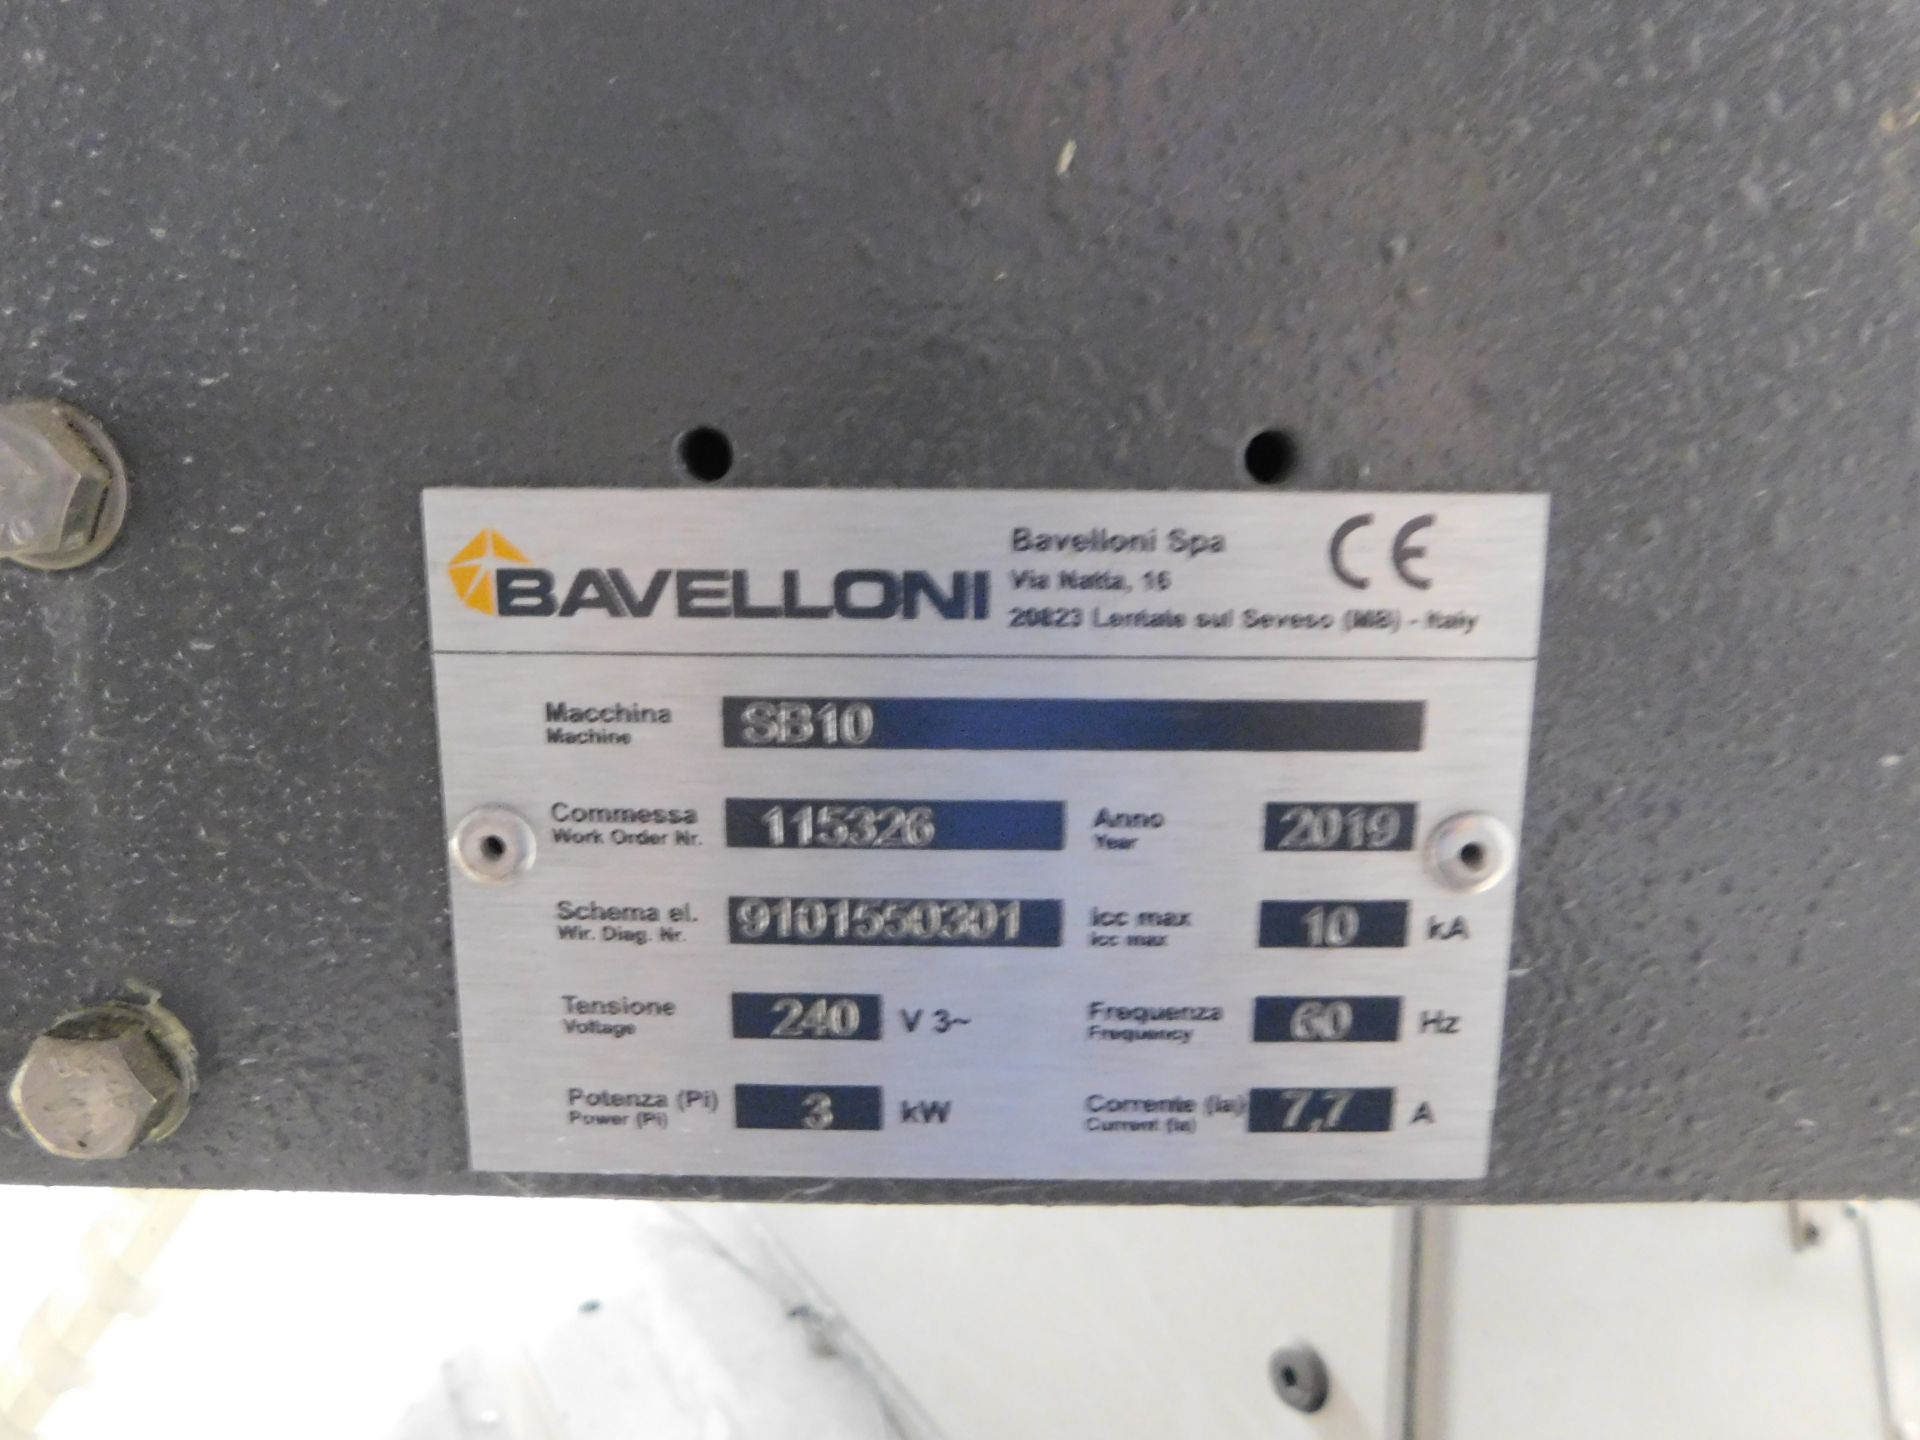 2019 Bavelloni Programmable Polisher, Model SB10, s/n 115326, 240V, 3KW, (New never been used) - Image 5 of 5